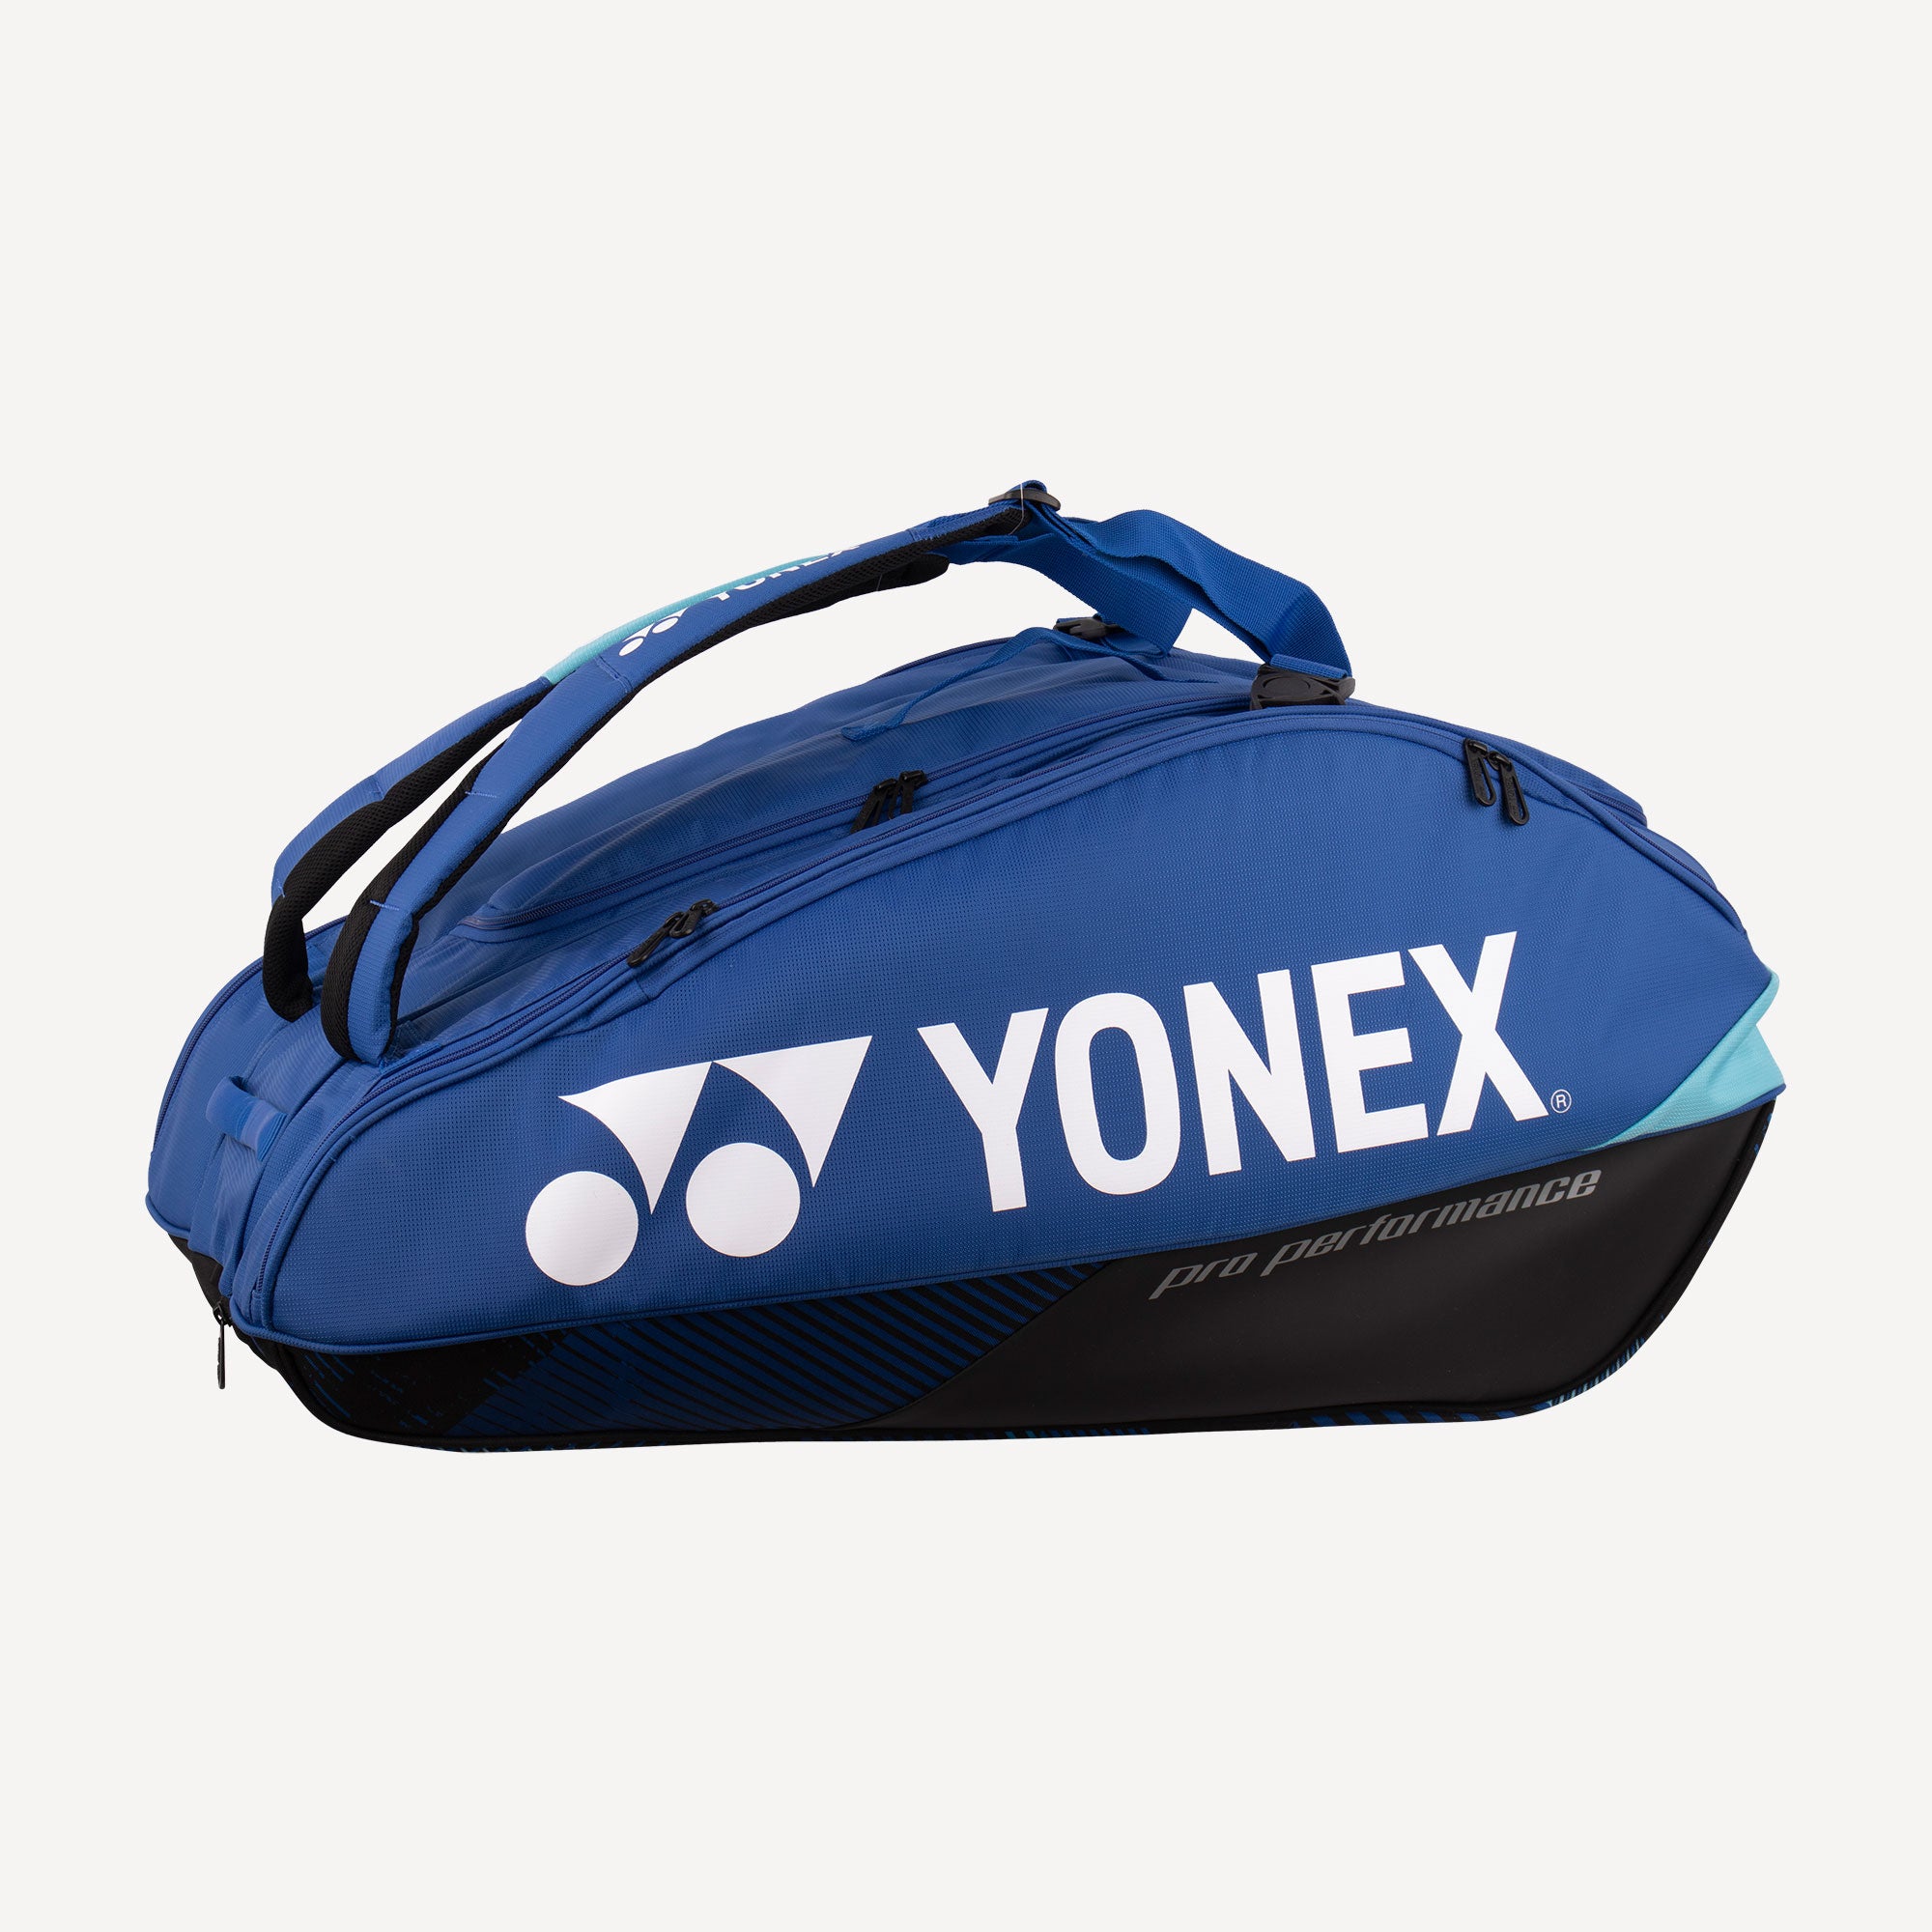 Yonex Pro 12 Racket Tennis Bag - Blue (1)